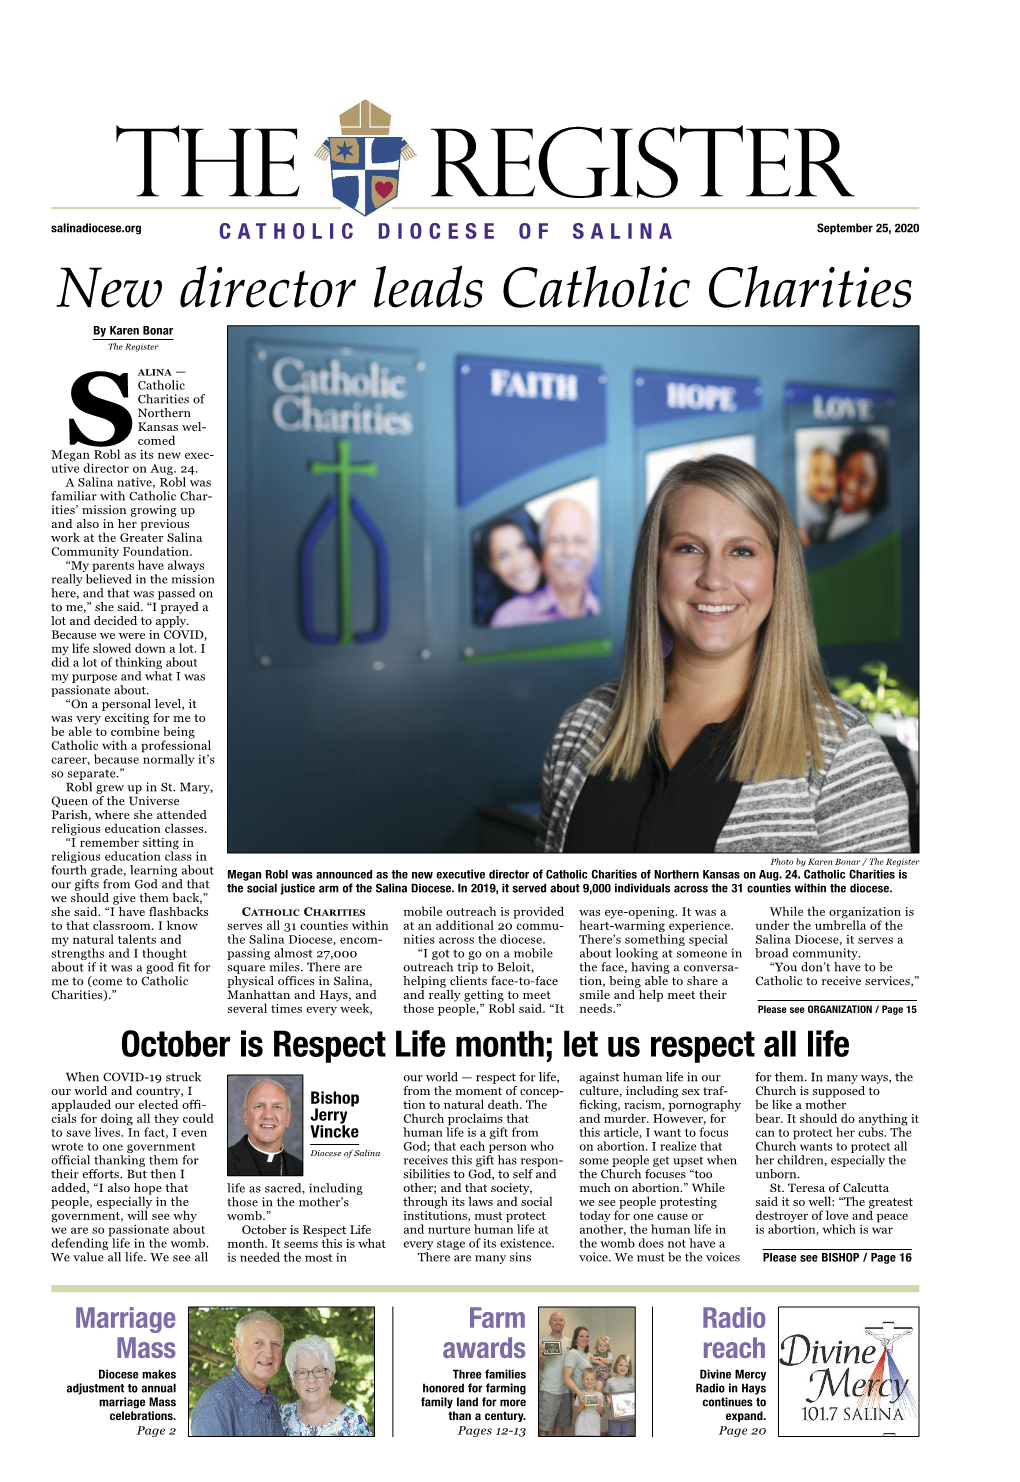 New Director Leads Catholic Charities by Karen Bonar the Register